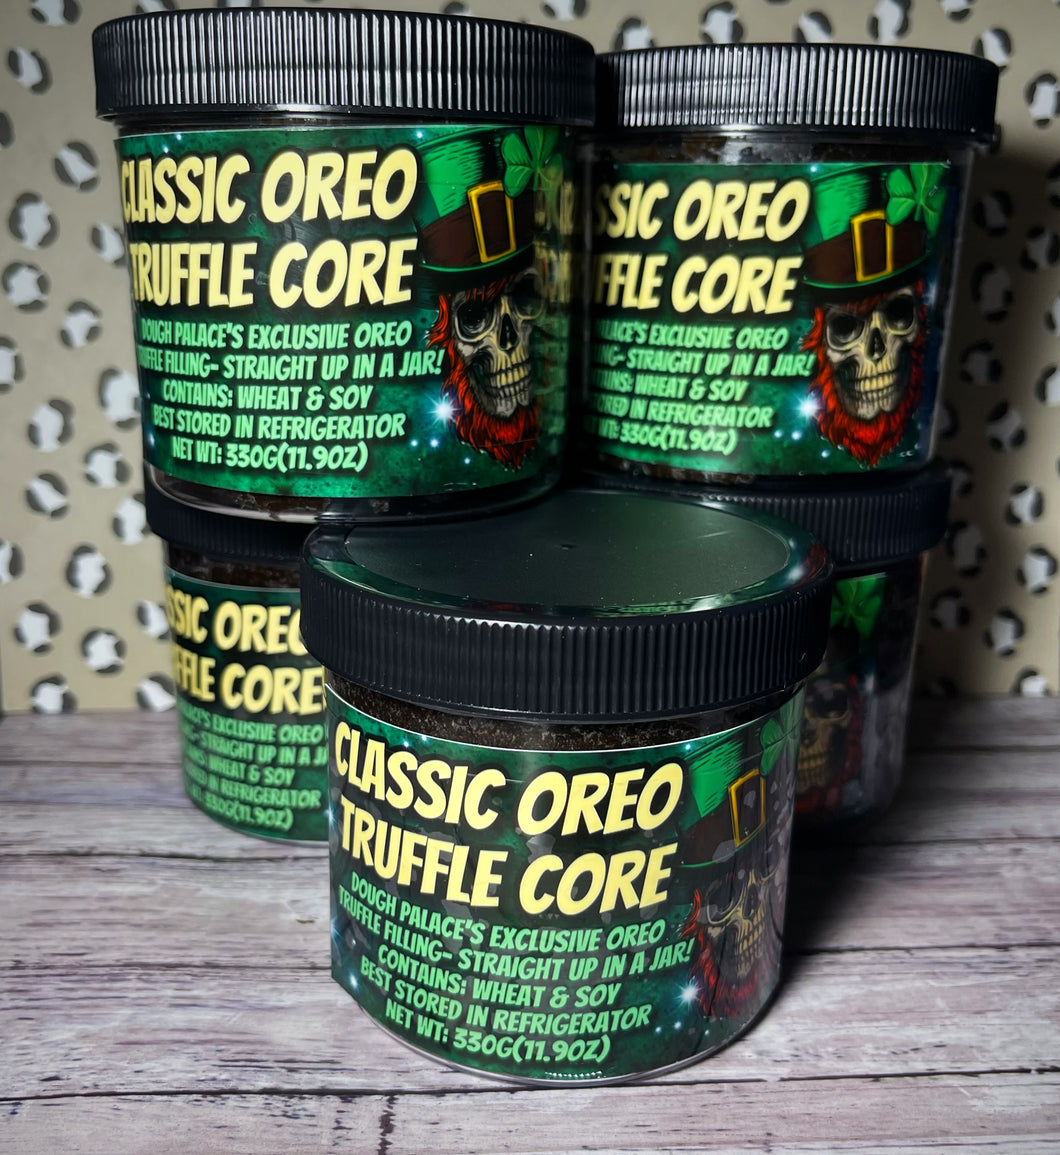 Classic Oreo Truffle Core